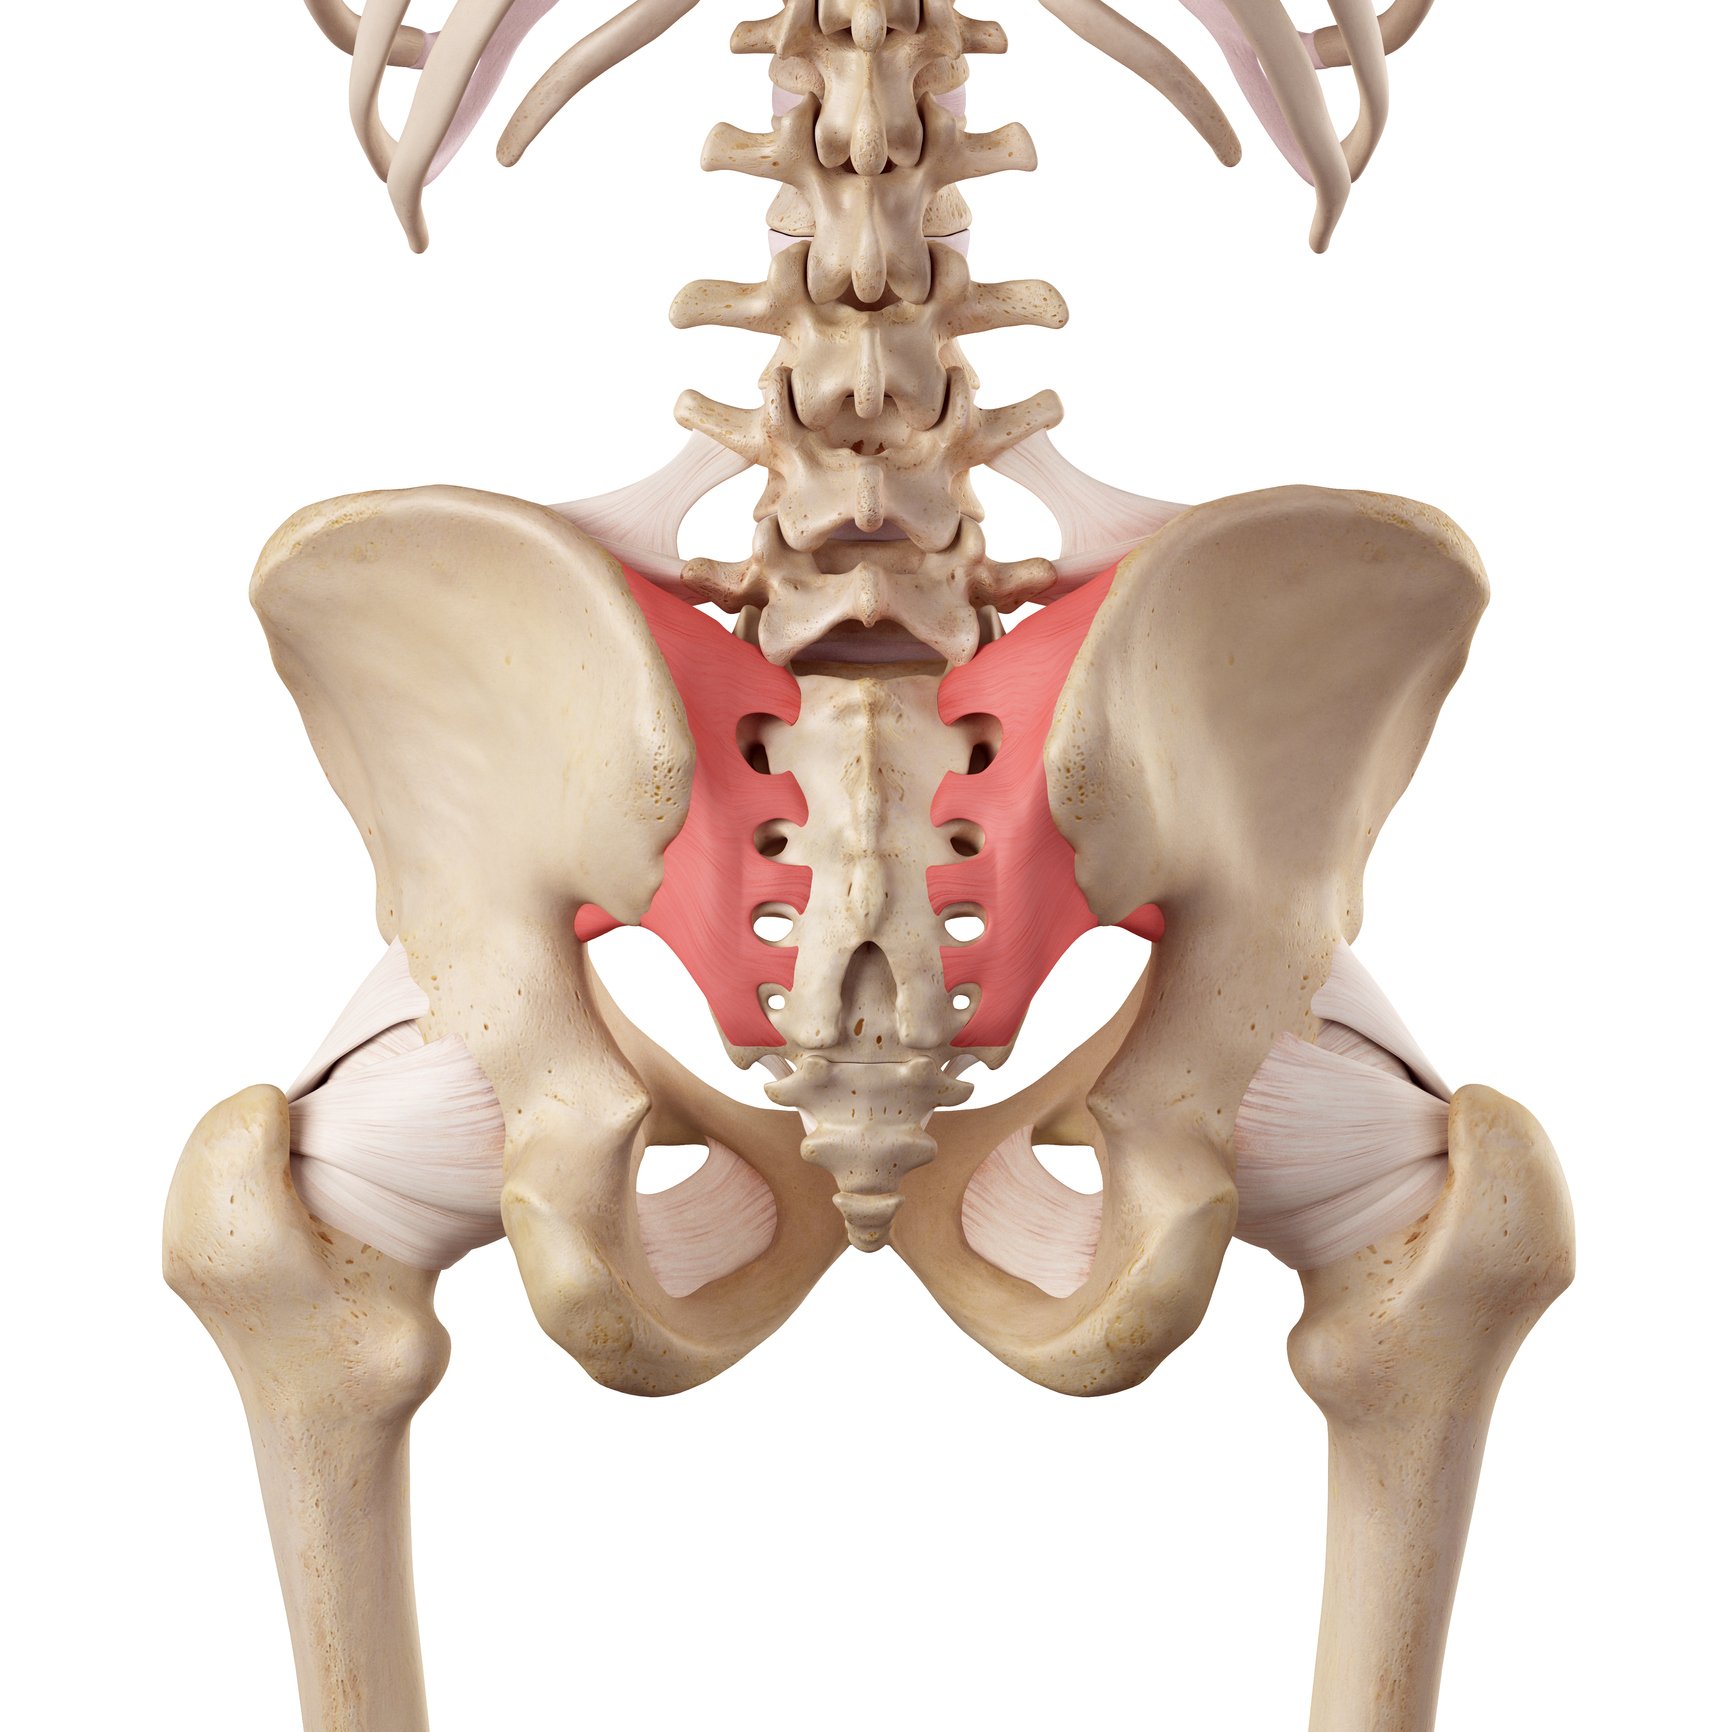 Back Pain Sacroiliac Joint Dysfunction Or Sacroiliitis Successful